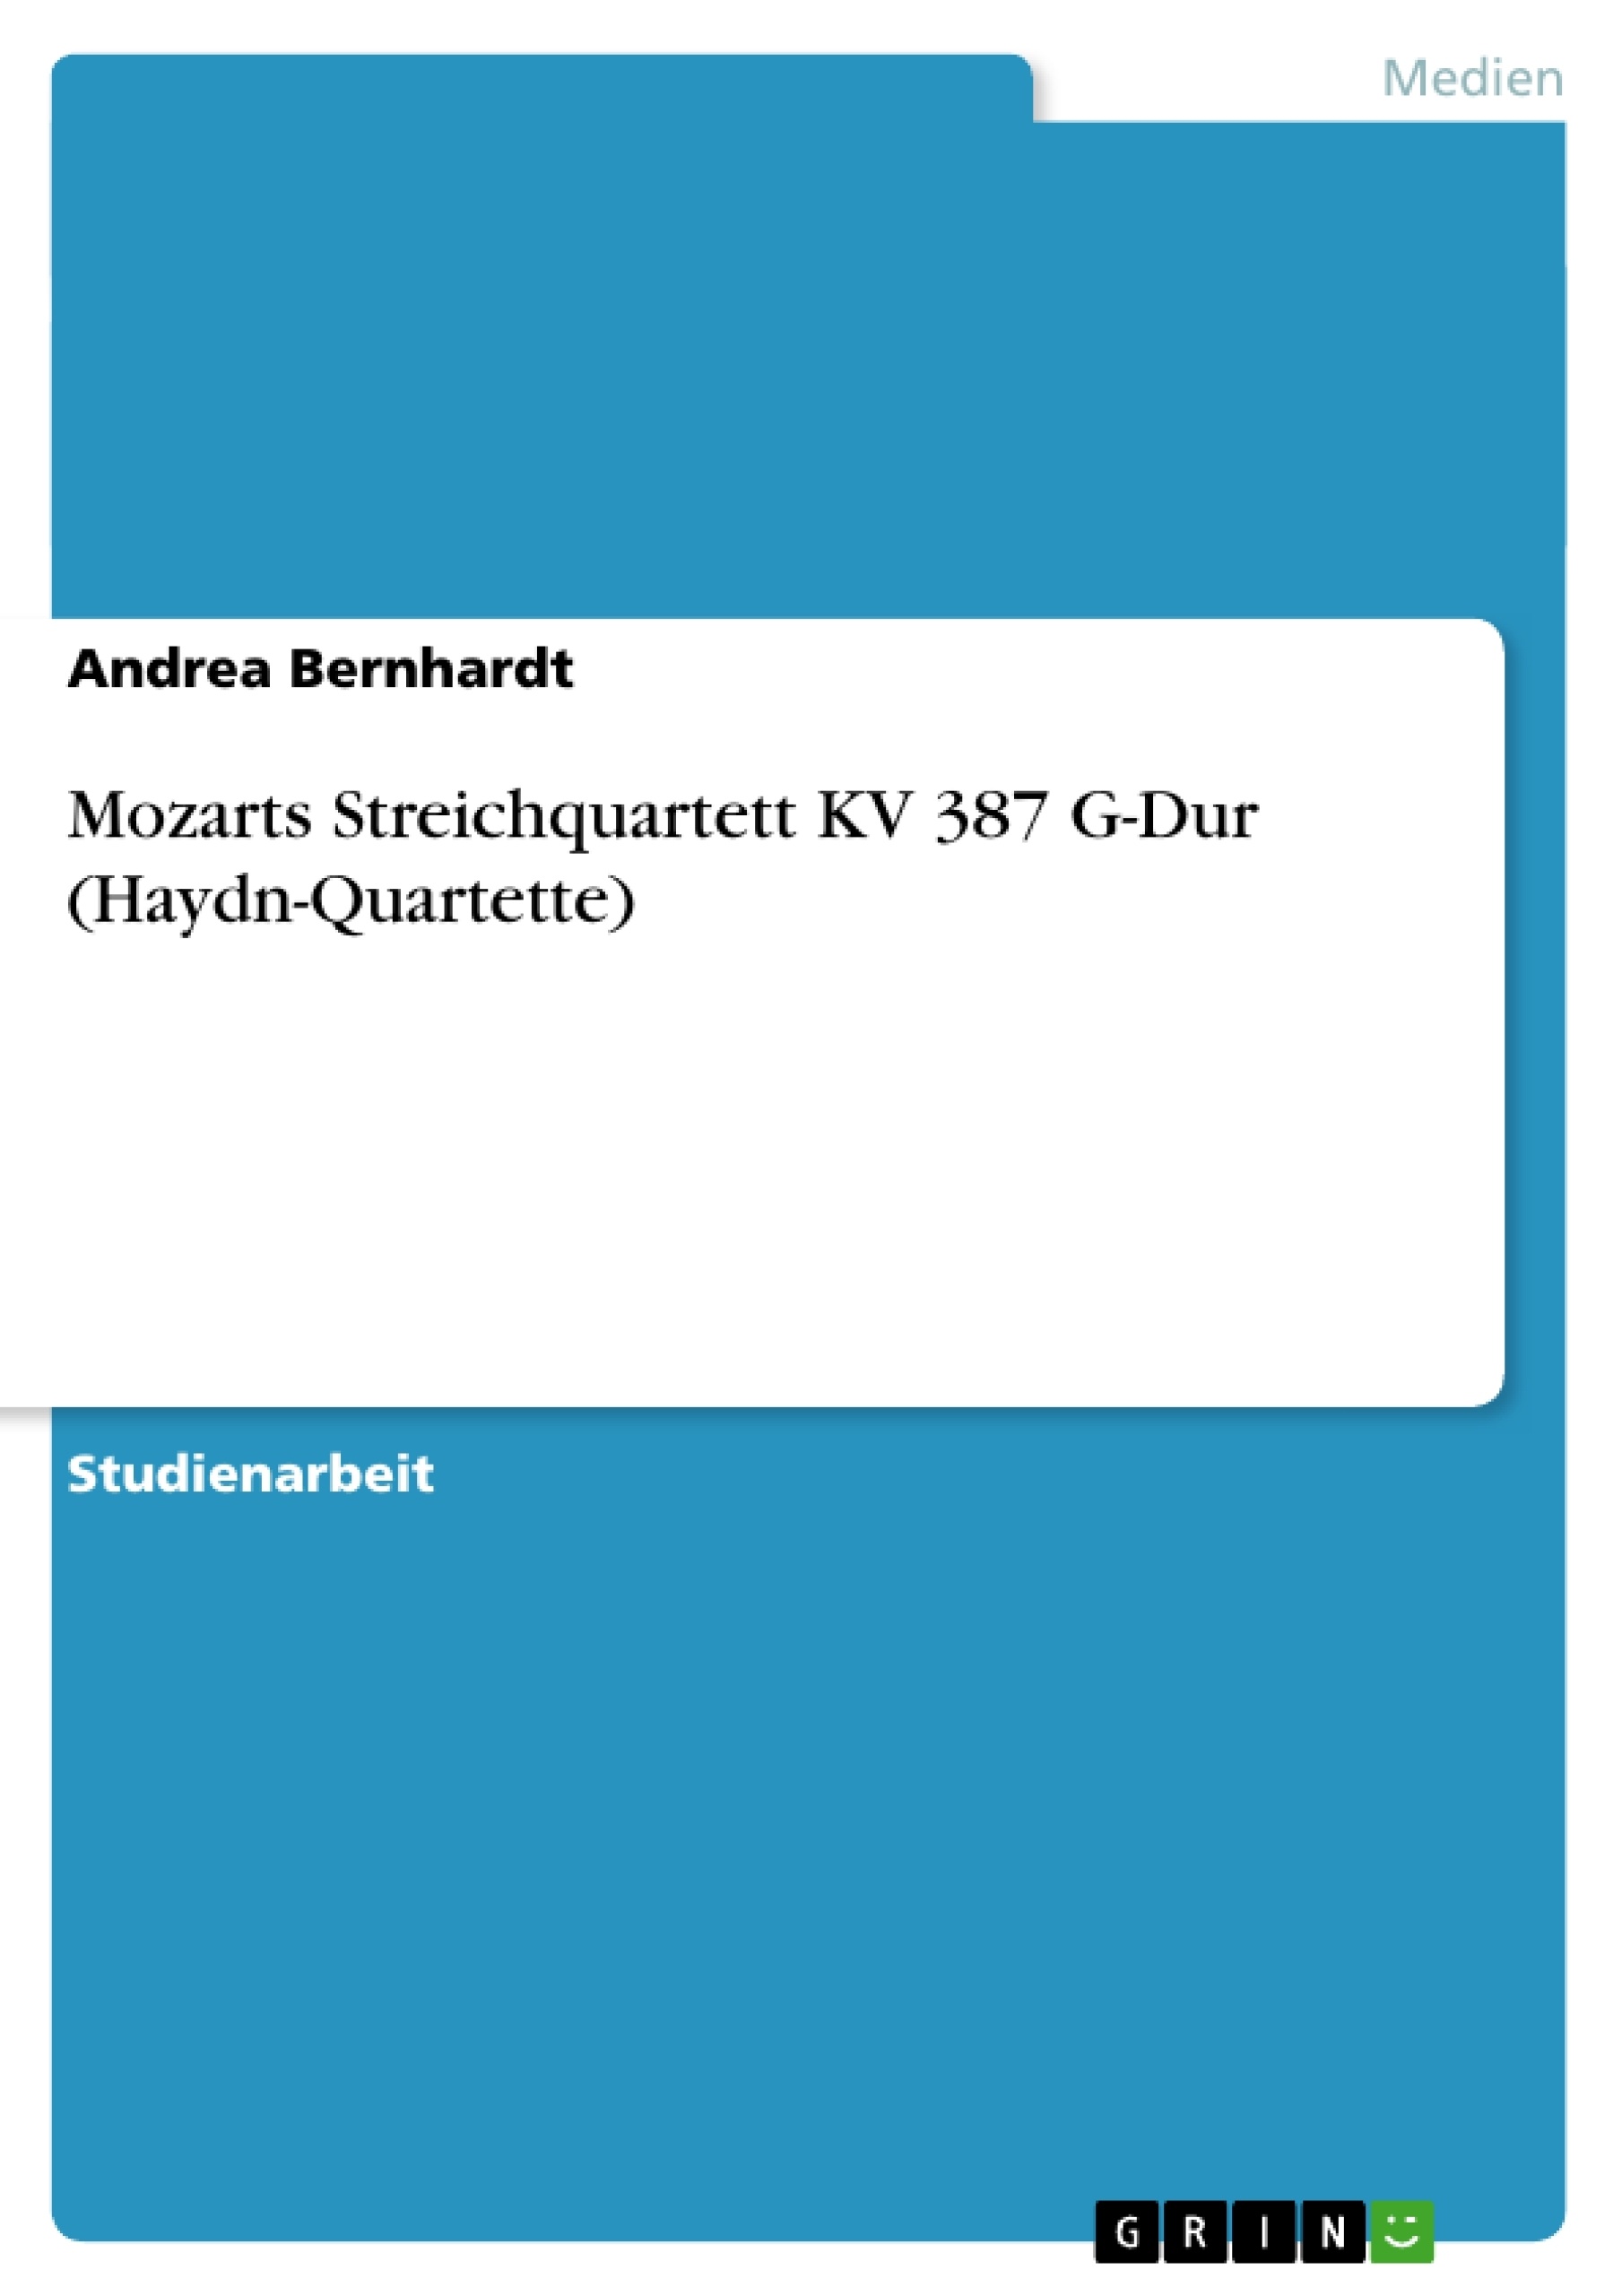 Título: Mozarts Streichquartett KV 387 G-Dur (Haydn-Quartette)